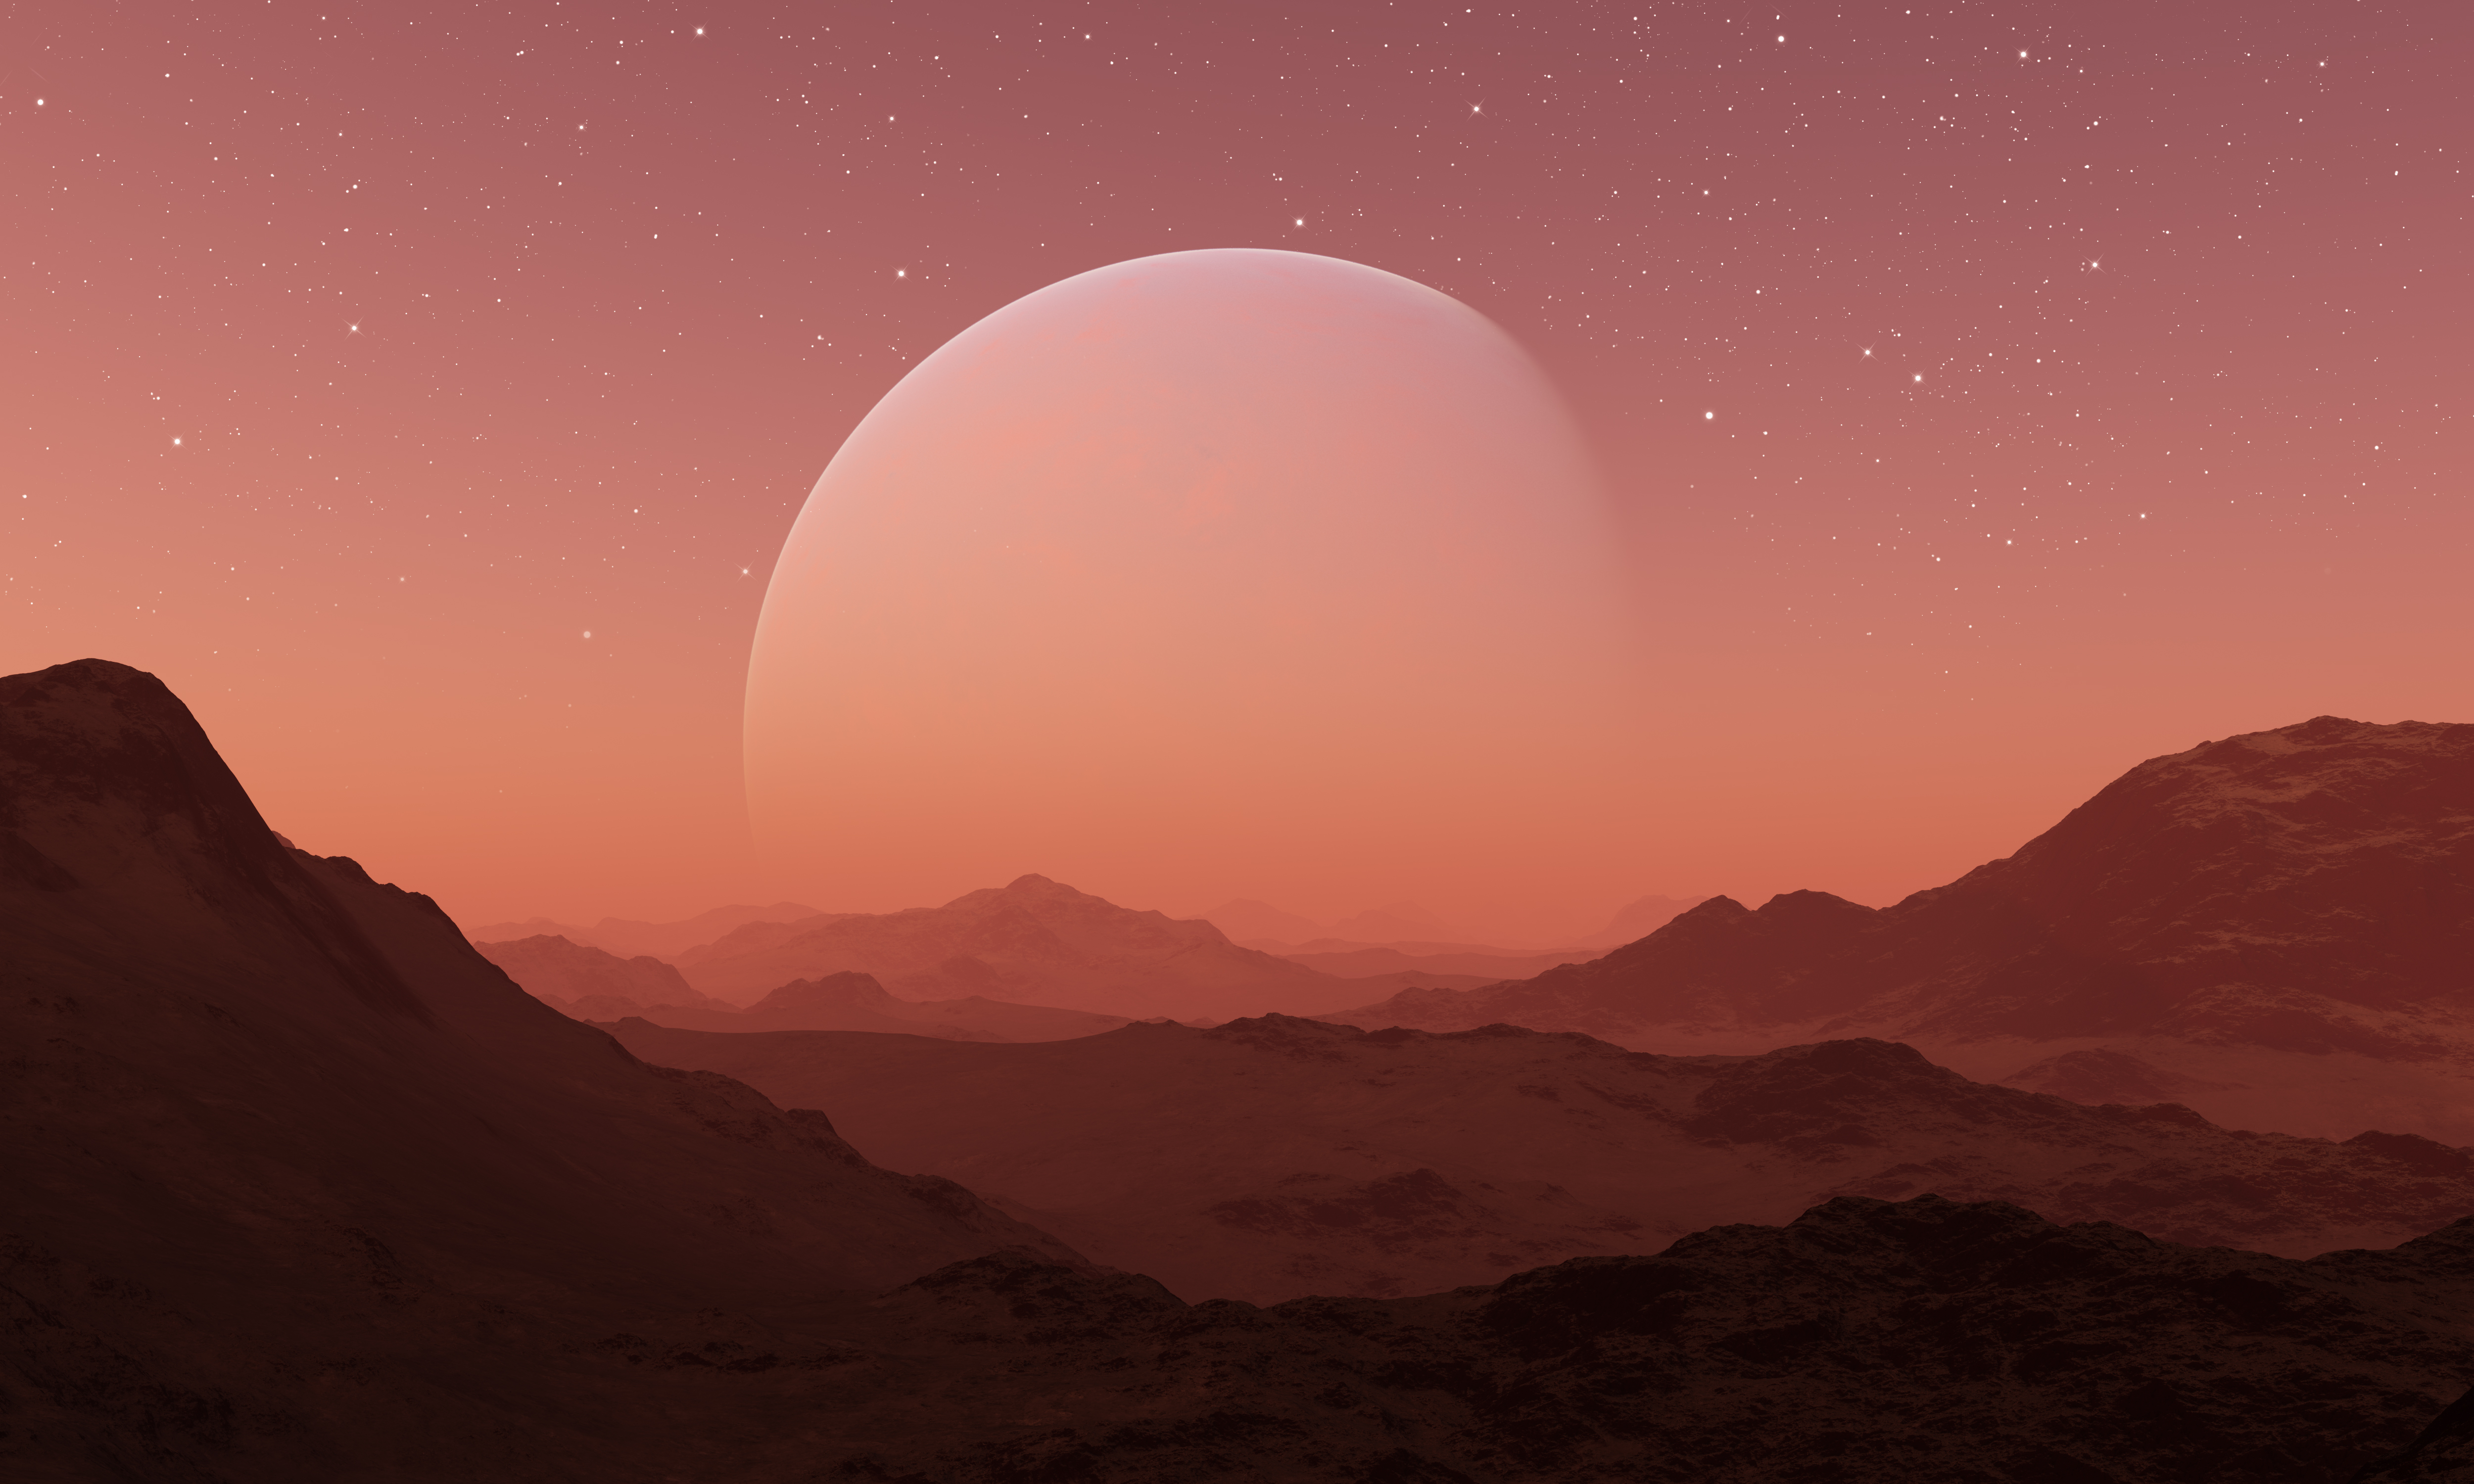 General 5000x3000 mountains CGI planet Moon stars landscape science fiction space Mars mist